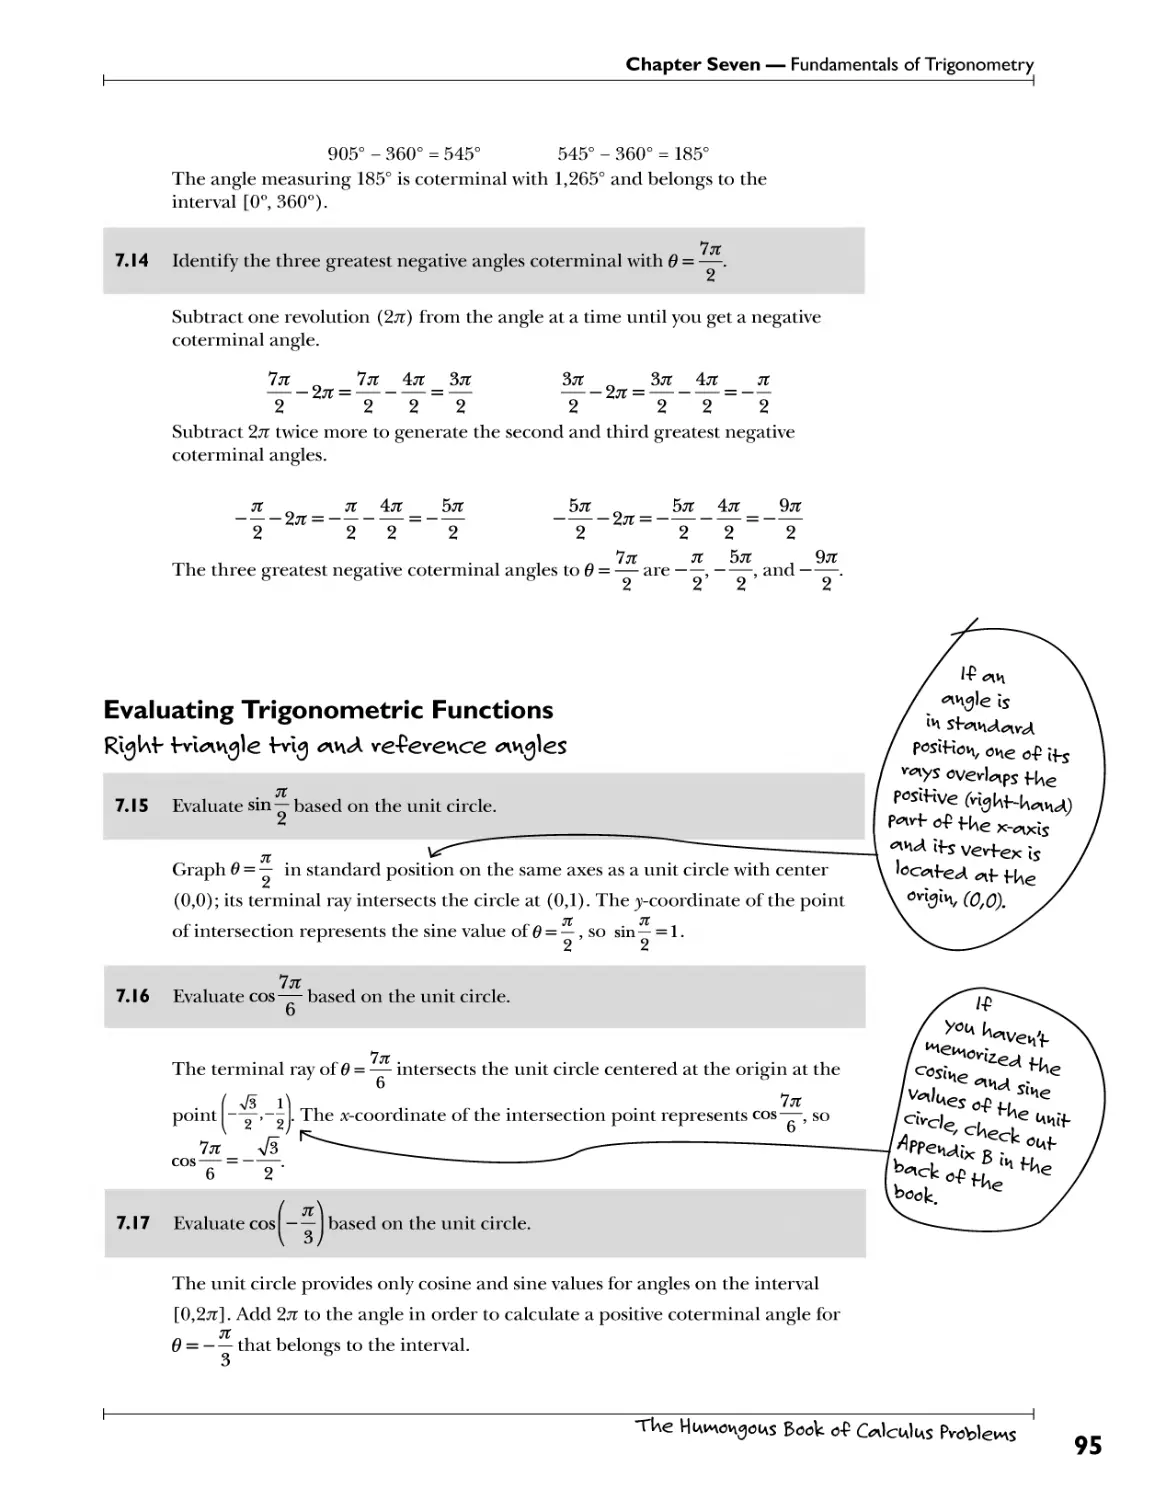 Evaluating Trigonometric Functions 95